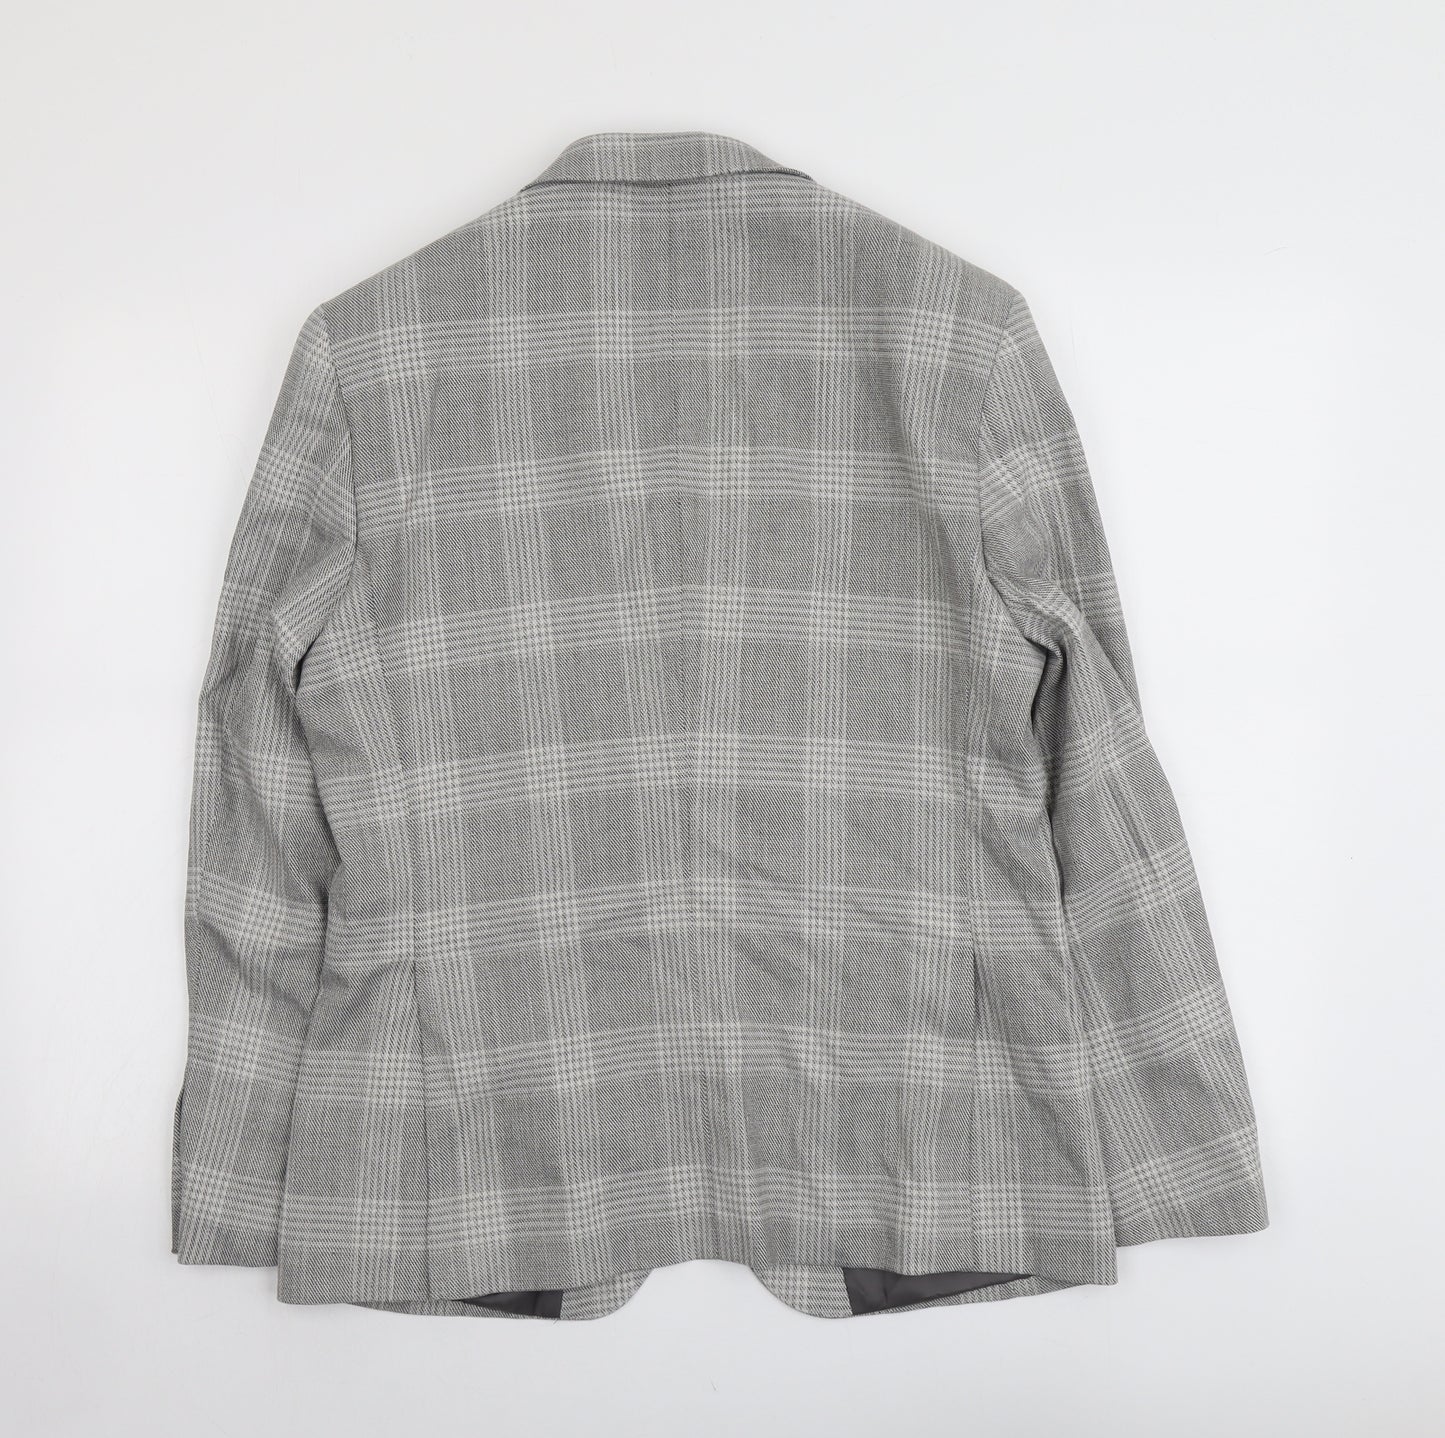 Marks and Spencer Mens Grey Plaid Polyester Jacket Blazer Size 38 Regular